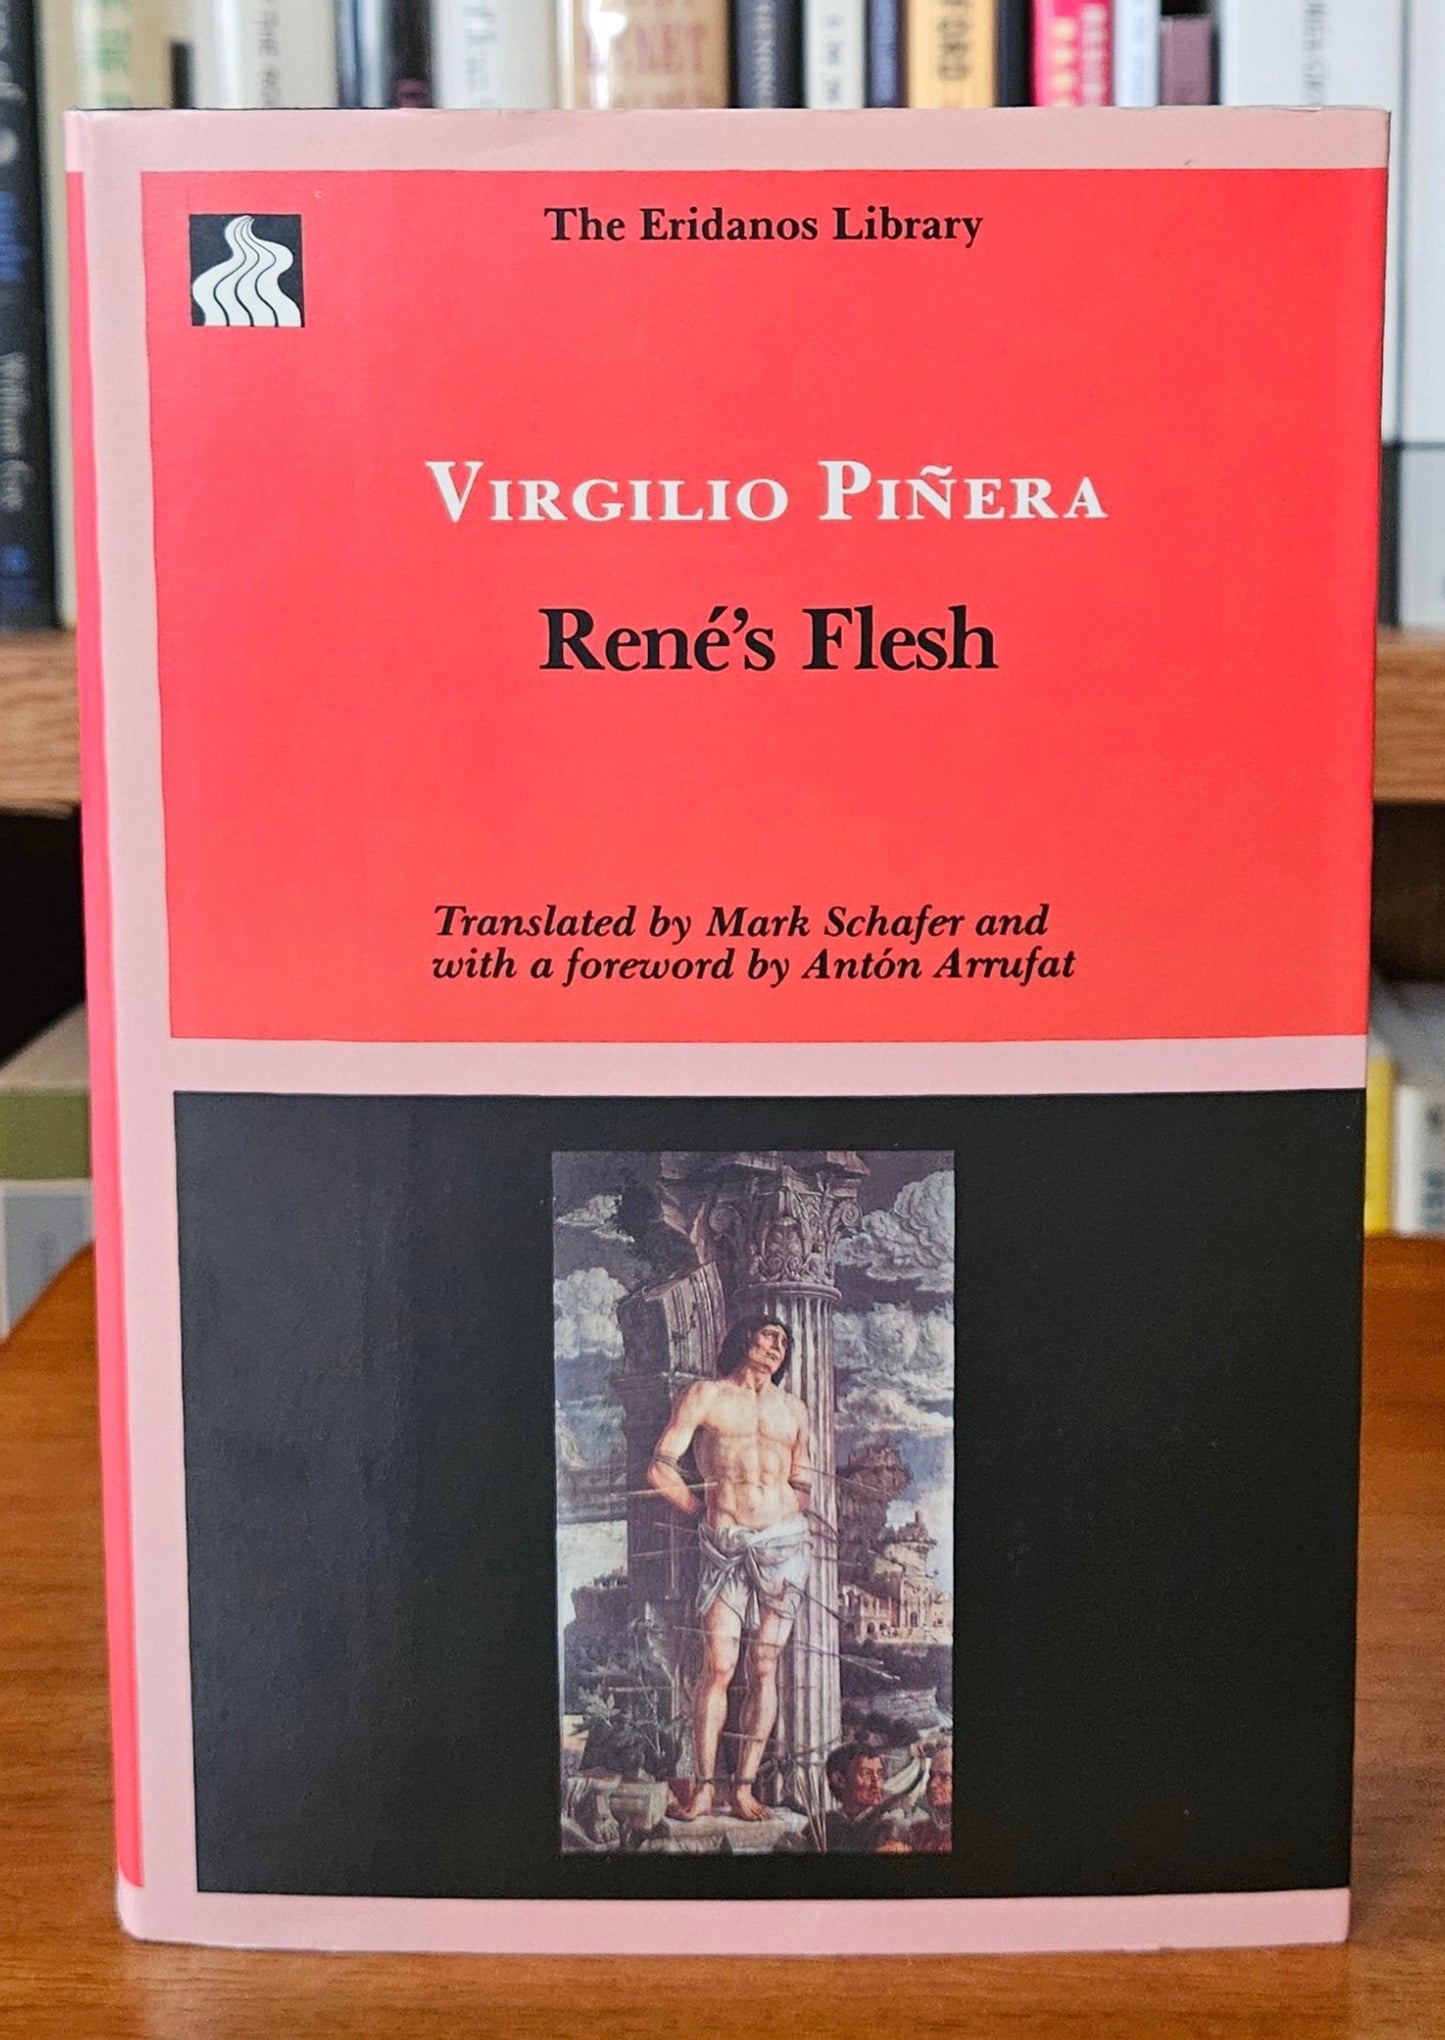 Virgilio Pinera - Rene's Flash